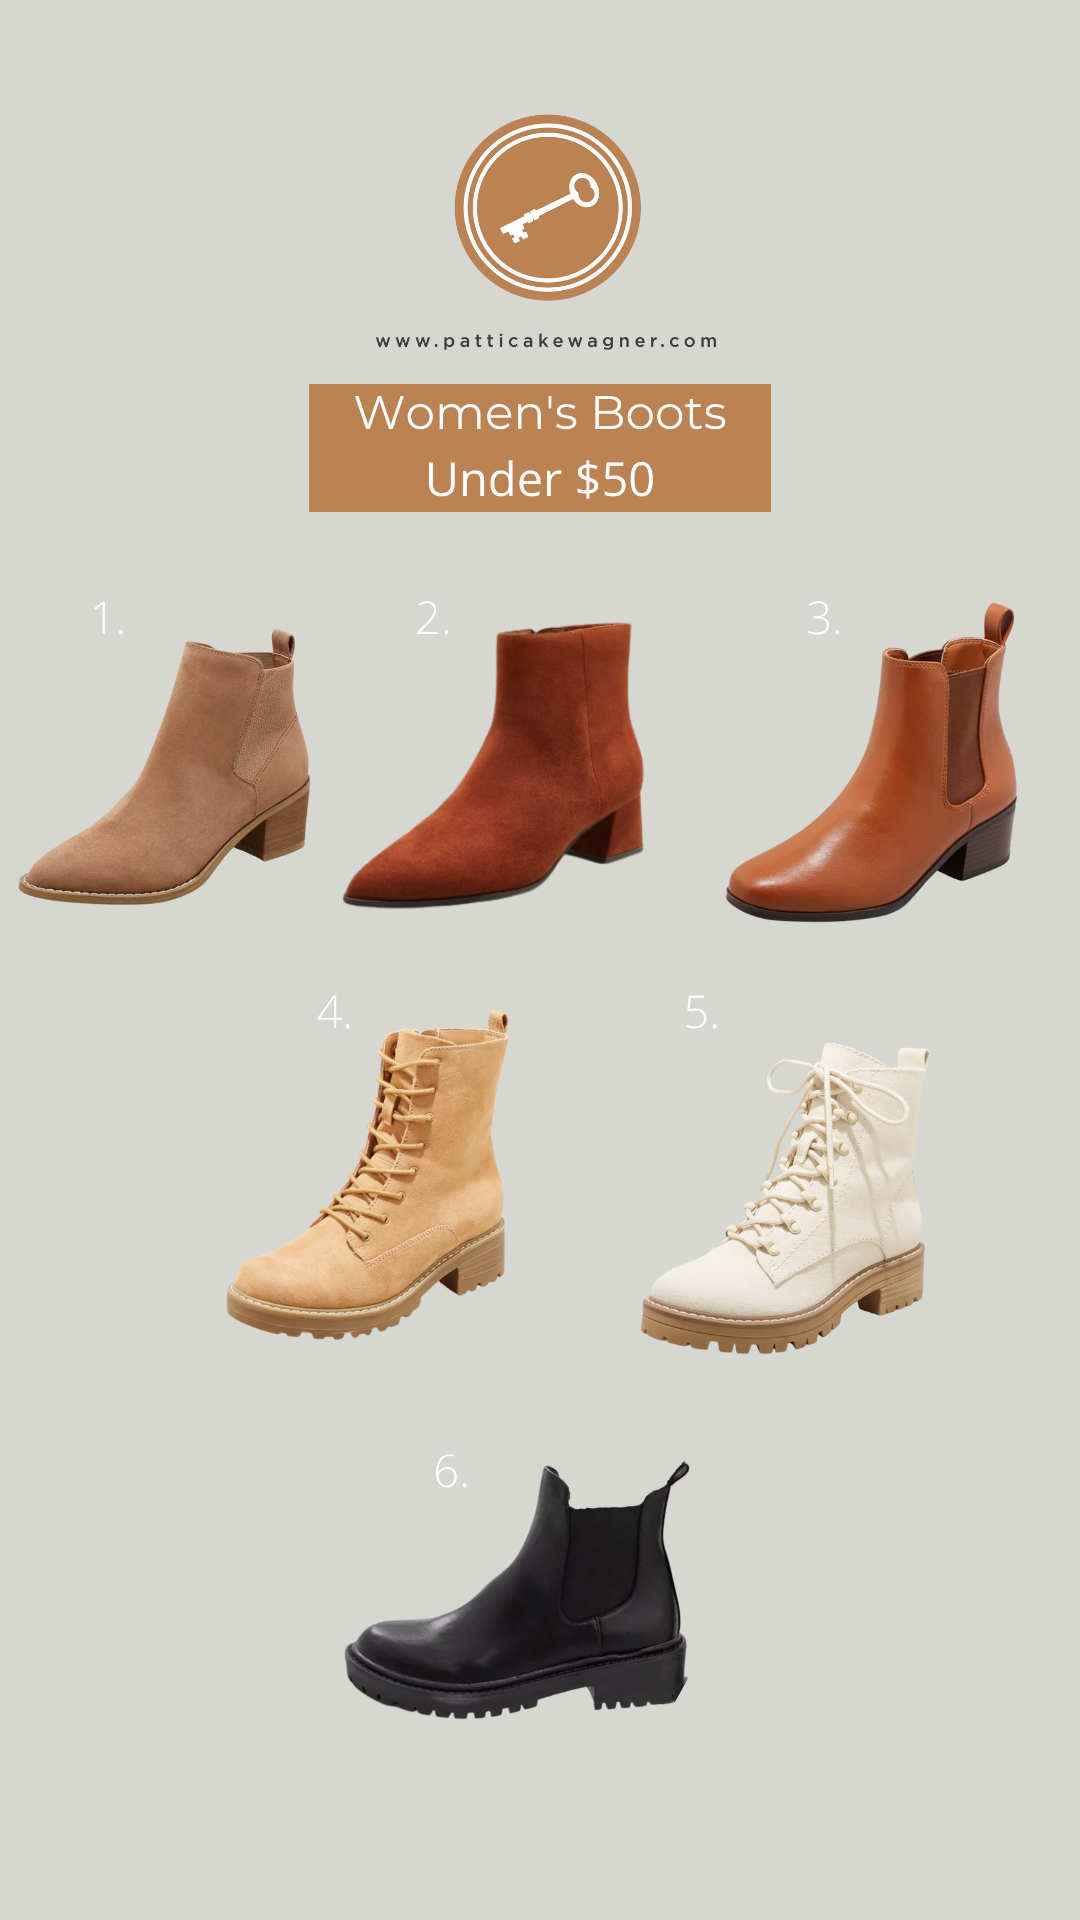 Patticakewagner-Women's Boots Under $50 & Adorable Kids Boots.png